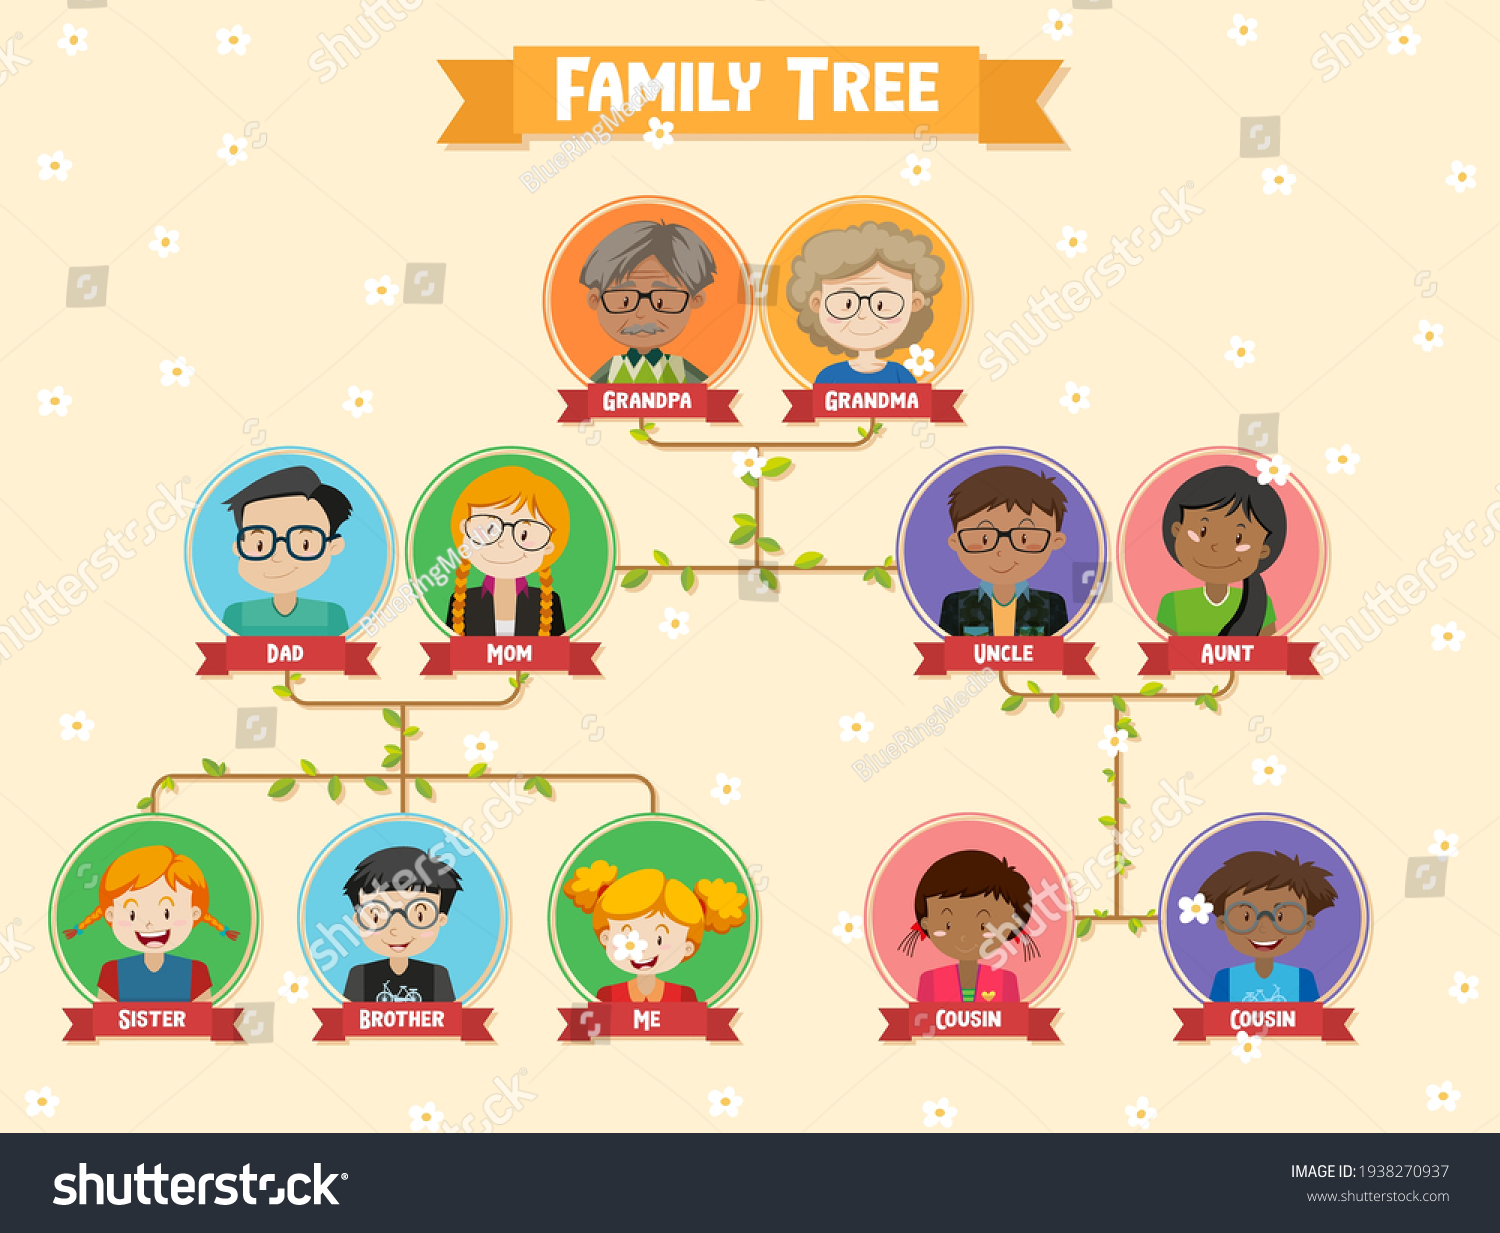 Diagram Showing Three Generation Family Tree Stock Vector (Royalty Free ...